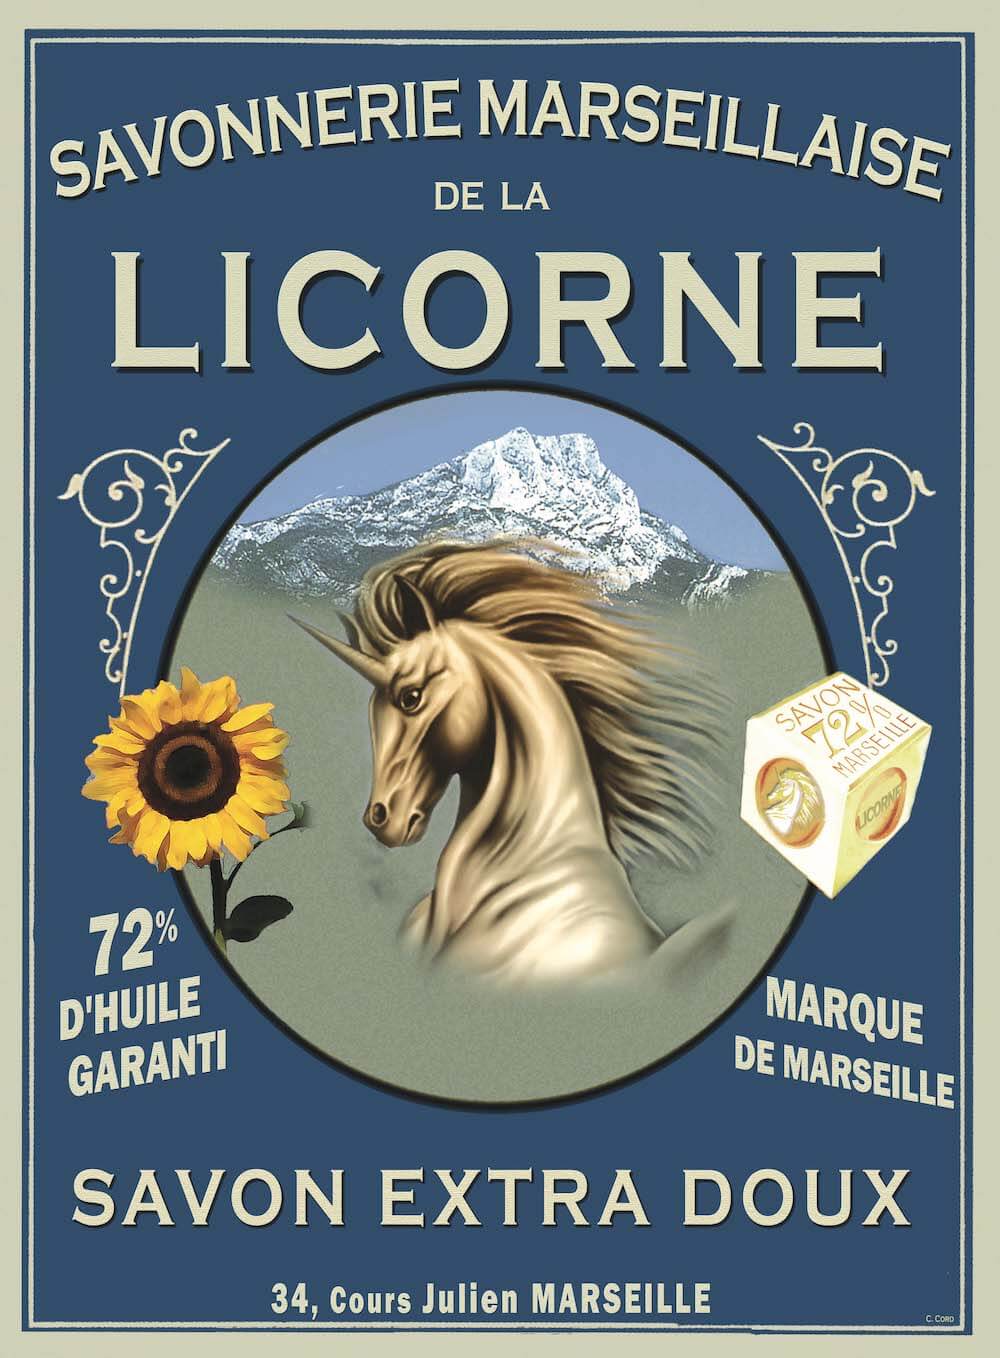 Savonnerie La Licorne logo